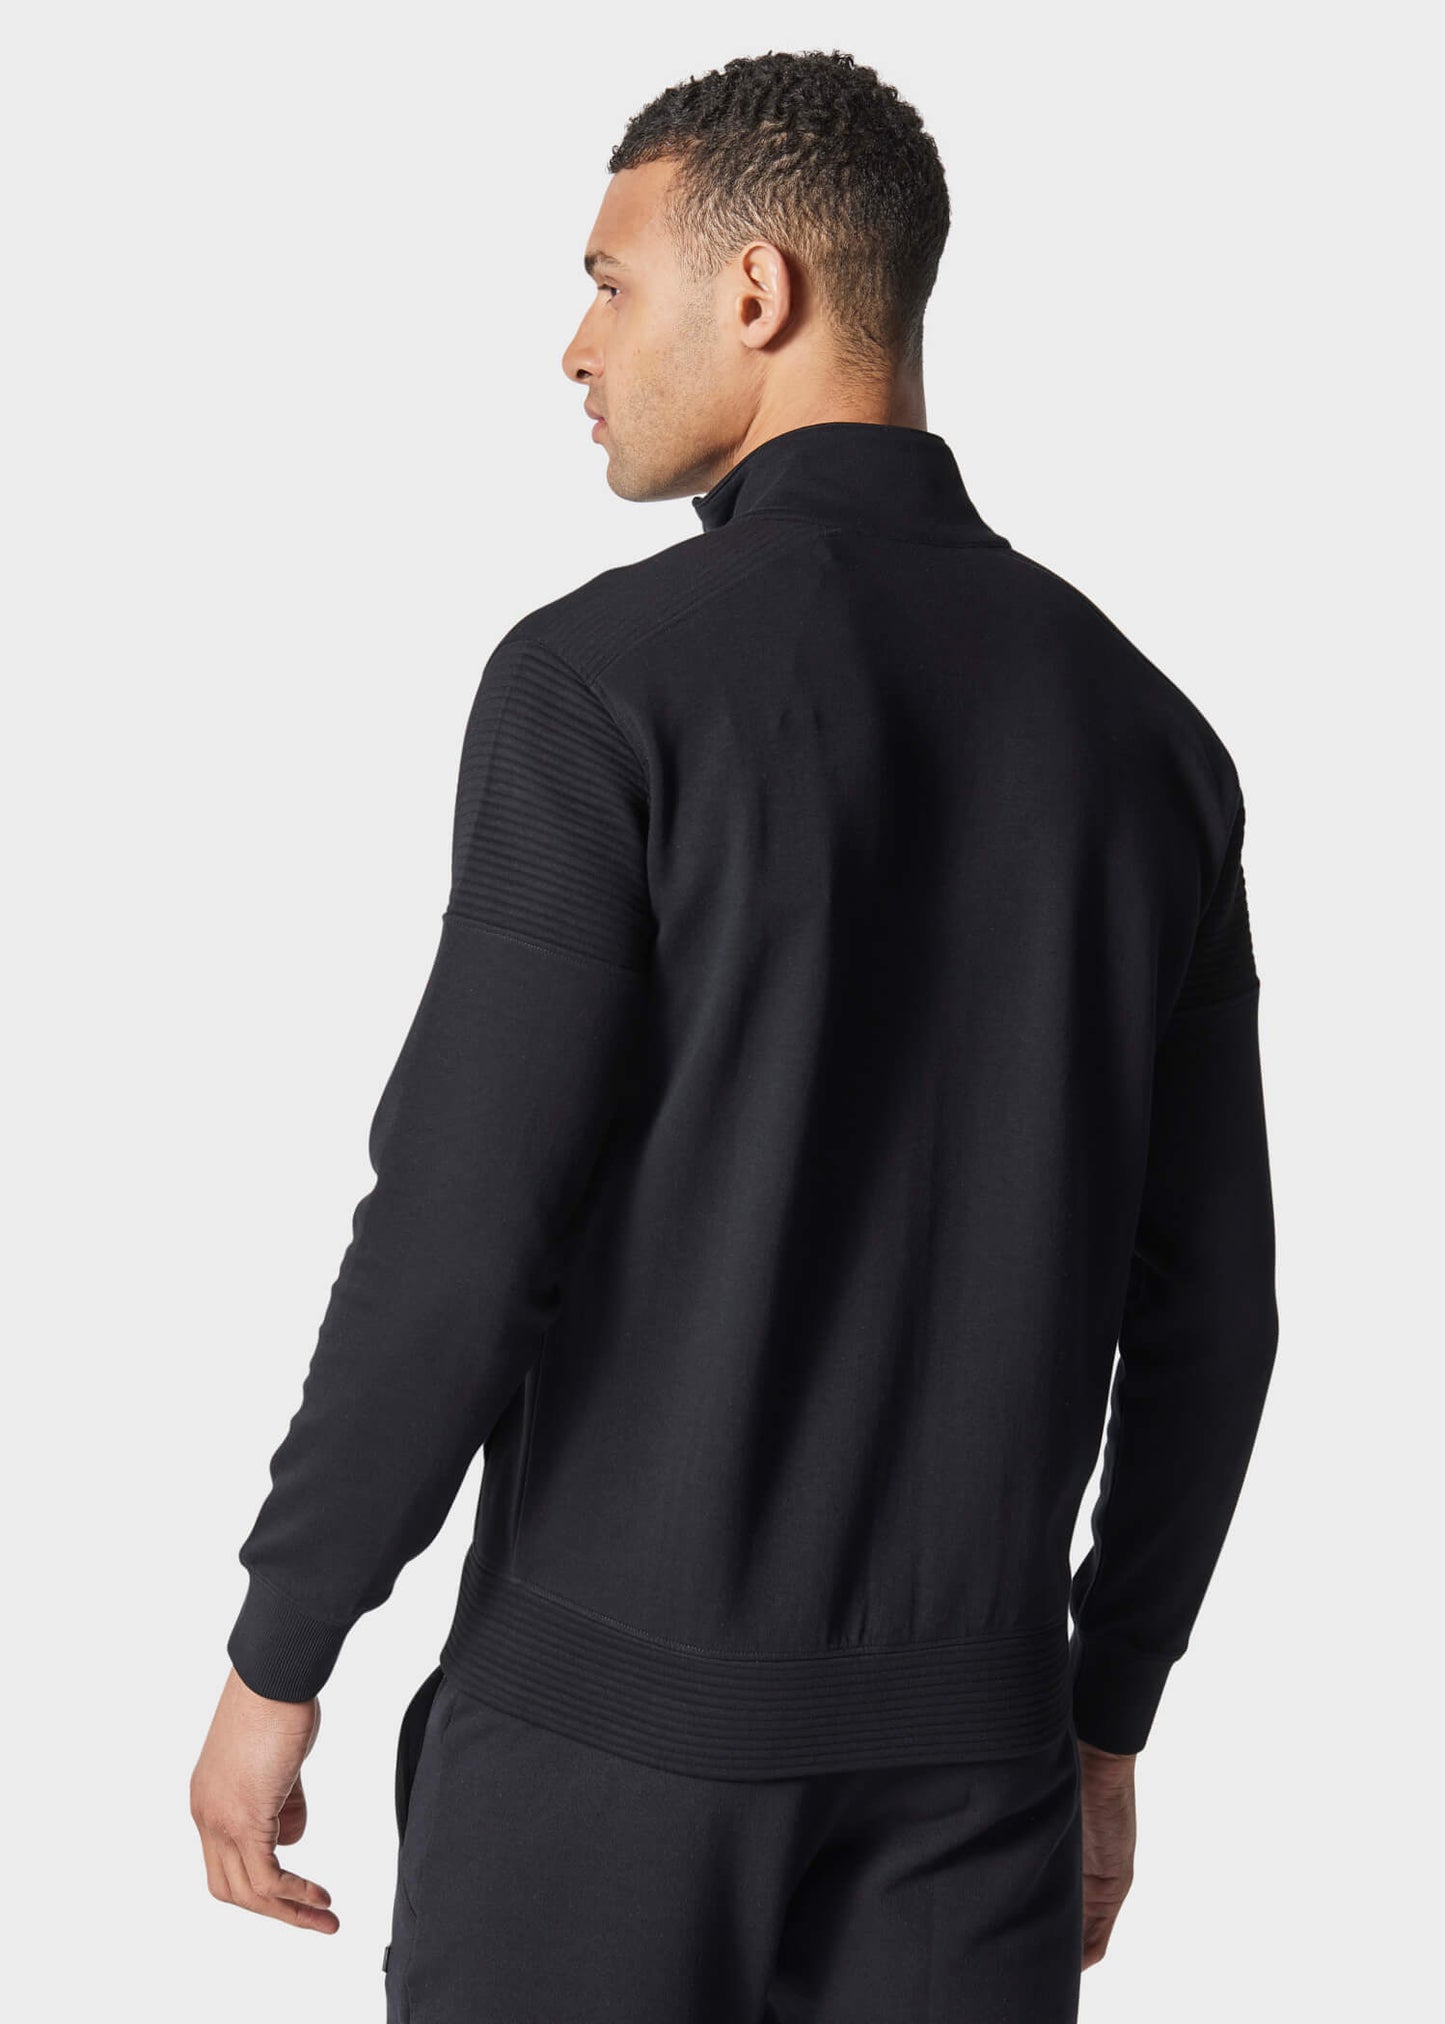 Stretta Black Zip-Up Sweatshirt